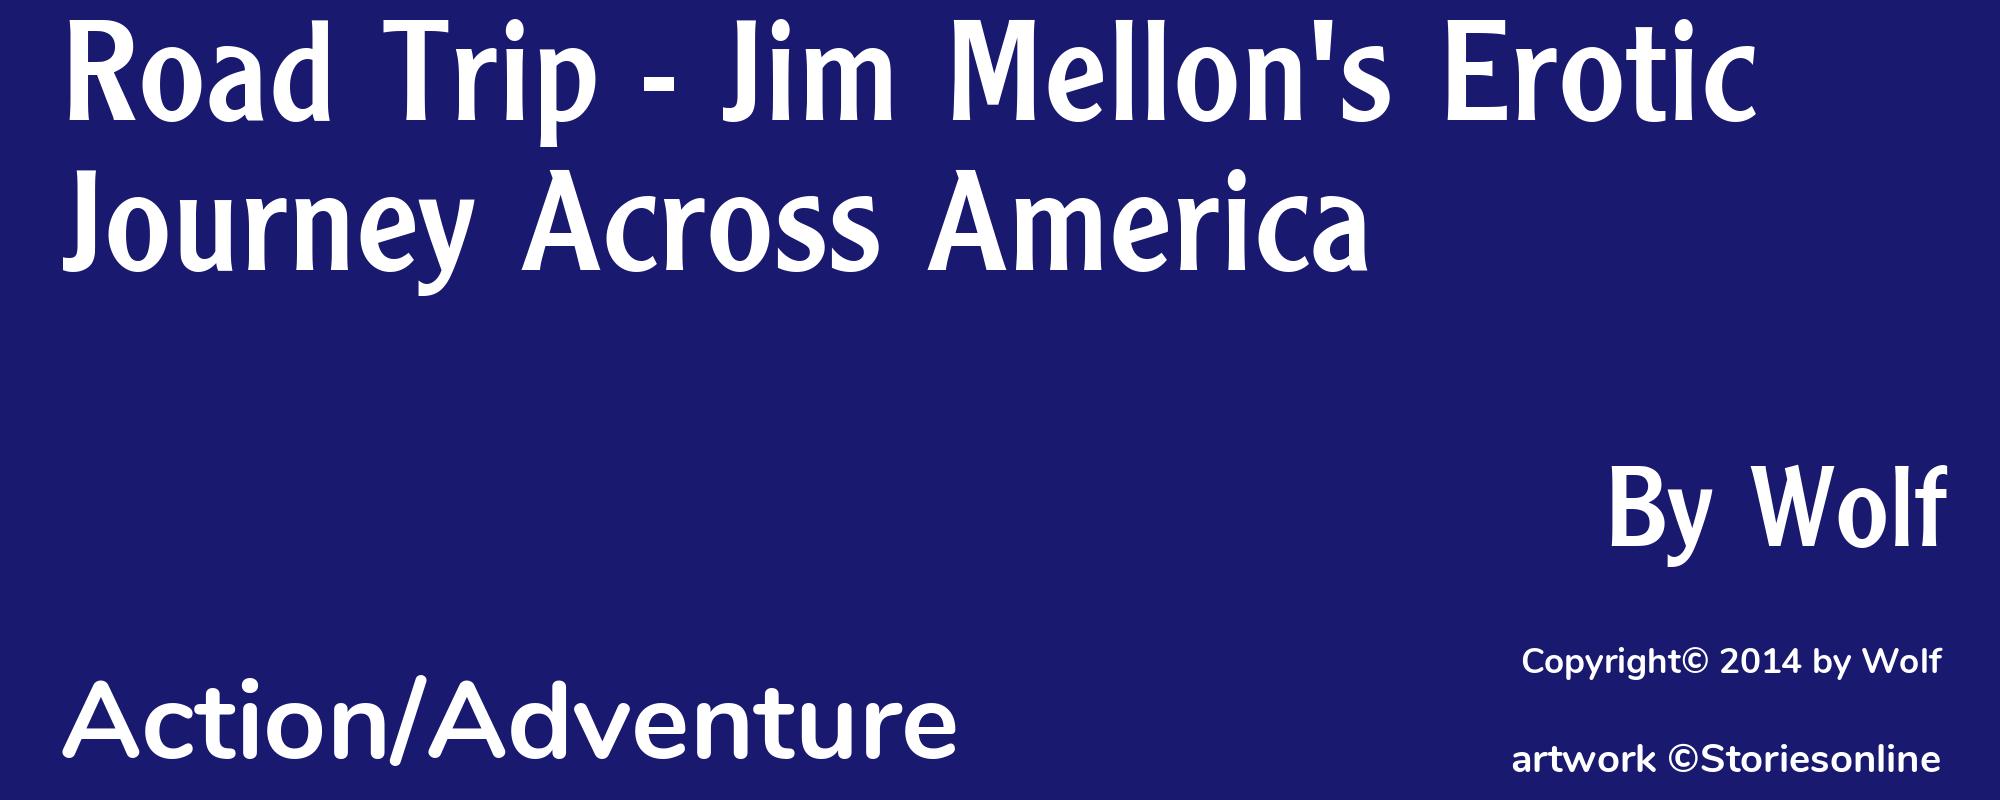 Road Trip - Jim Mellon's Erotic Journey Across America - Cover